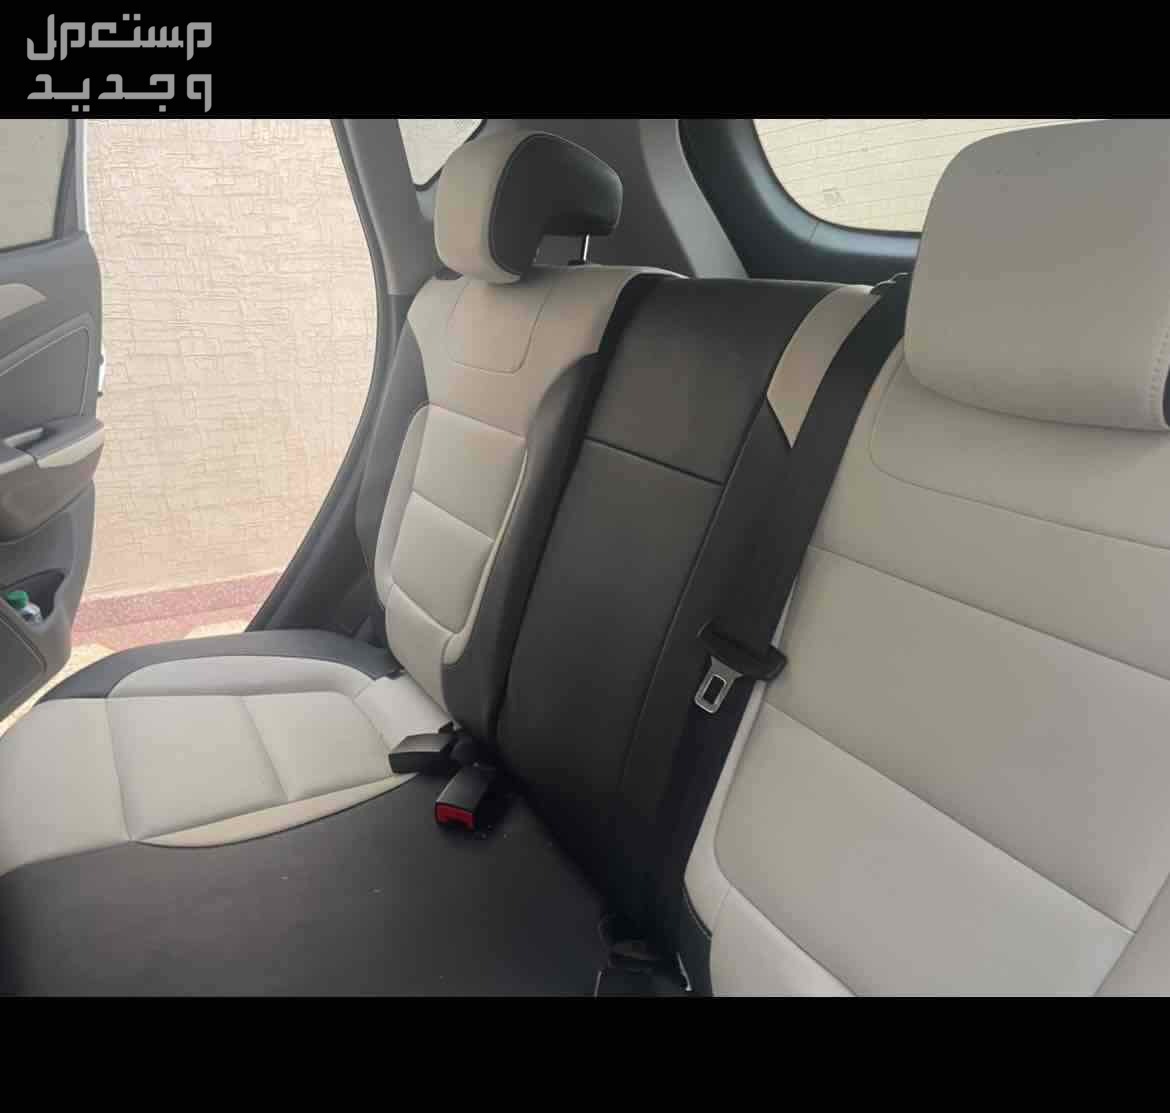 شانجان CS35 2019 في شقراء بسعر 45 ريال سعودي